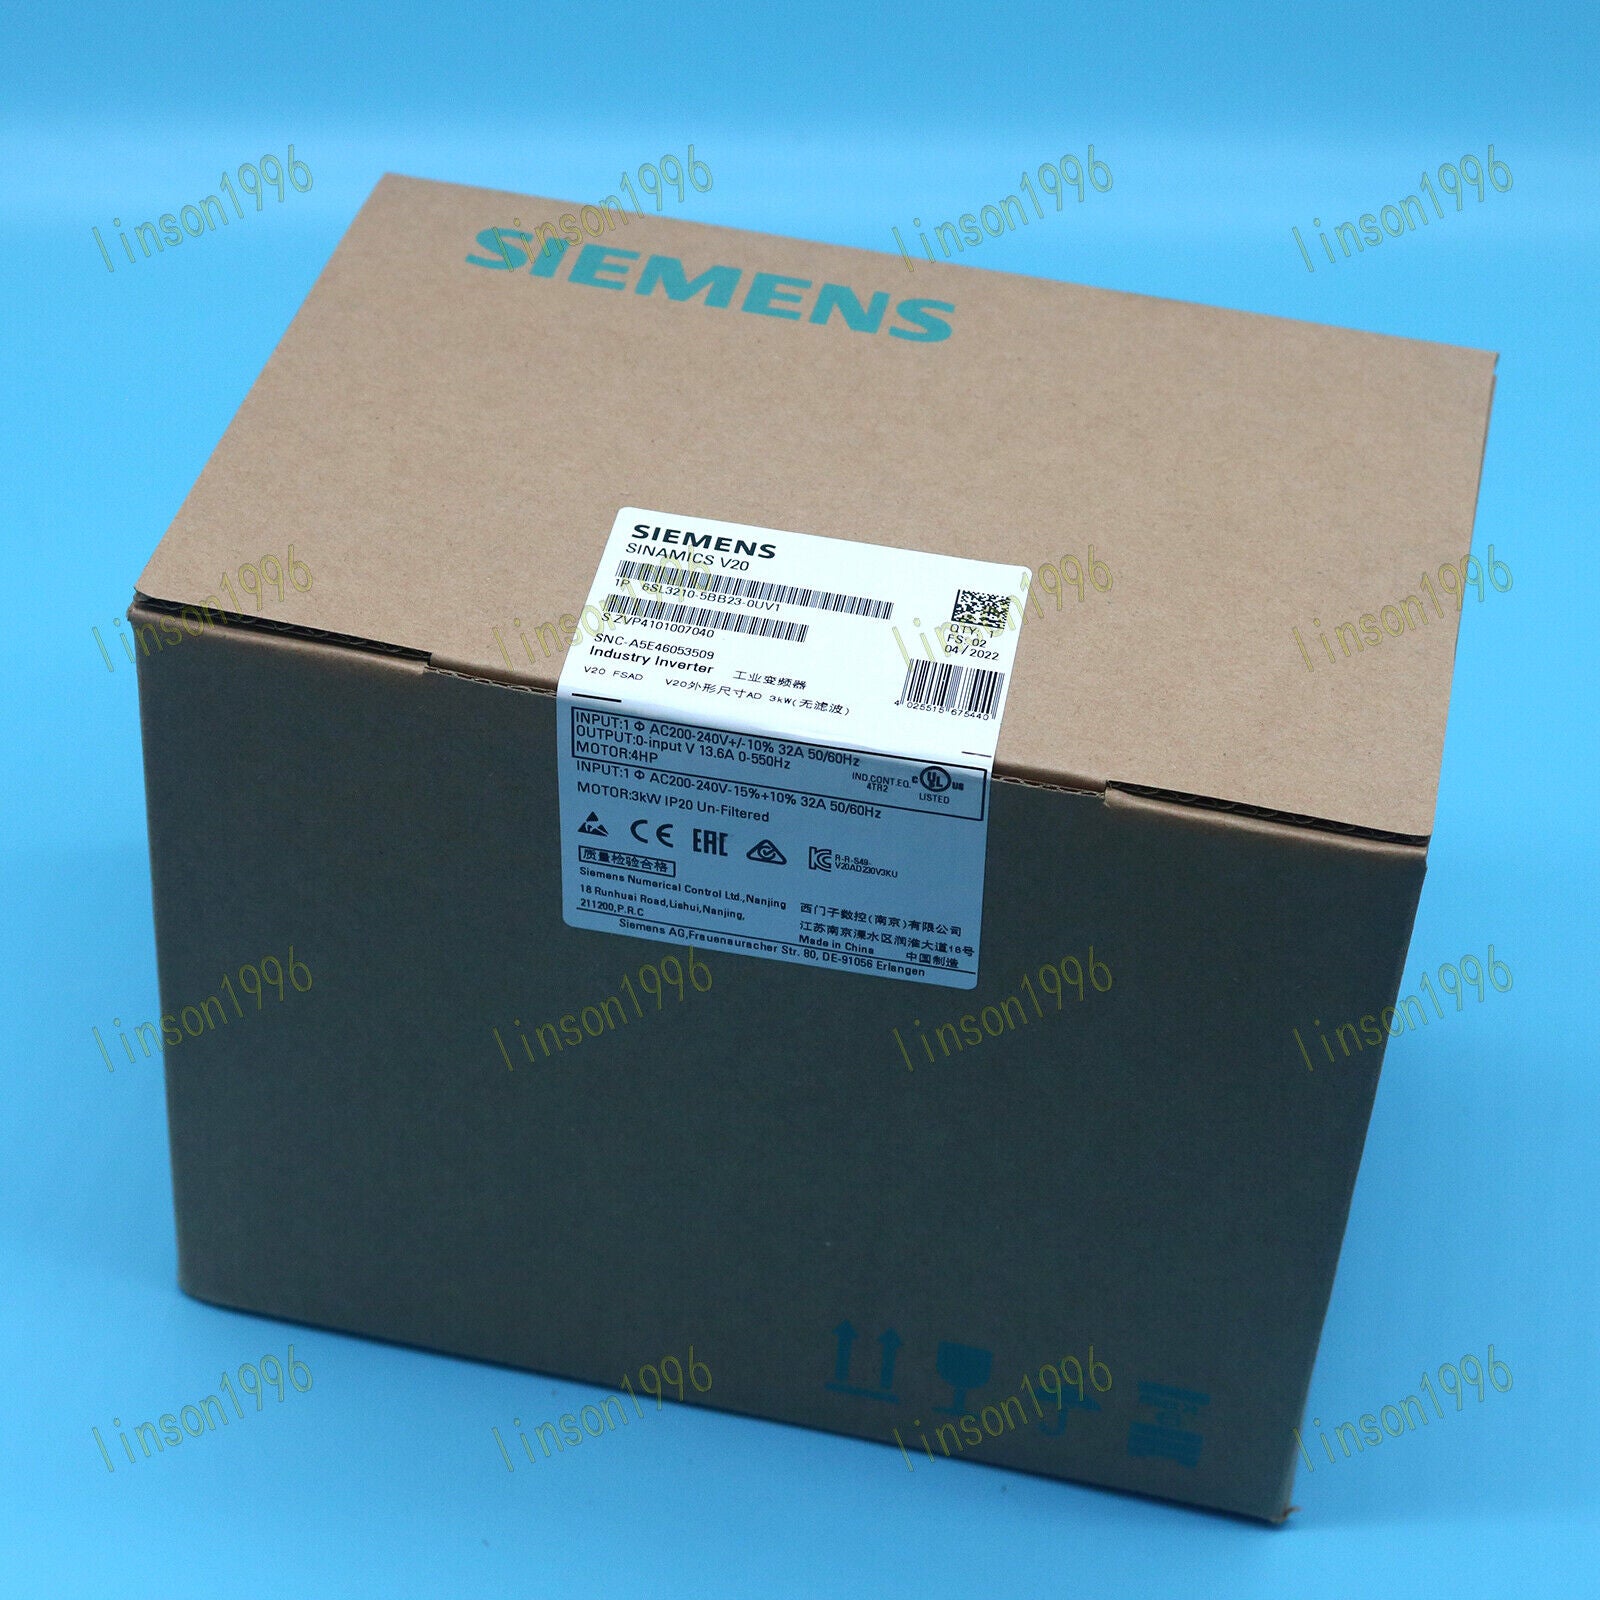 new 1PC  6SL3210-5BB23-0UV1 Siemens Frequency Converter Fast